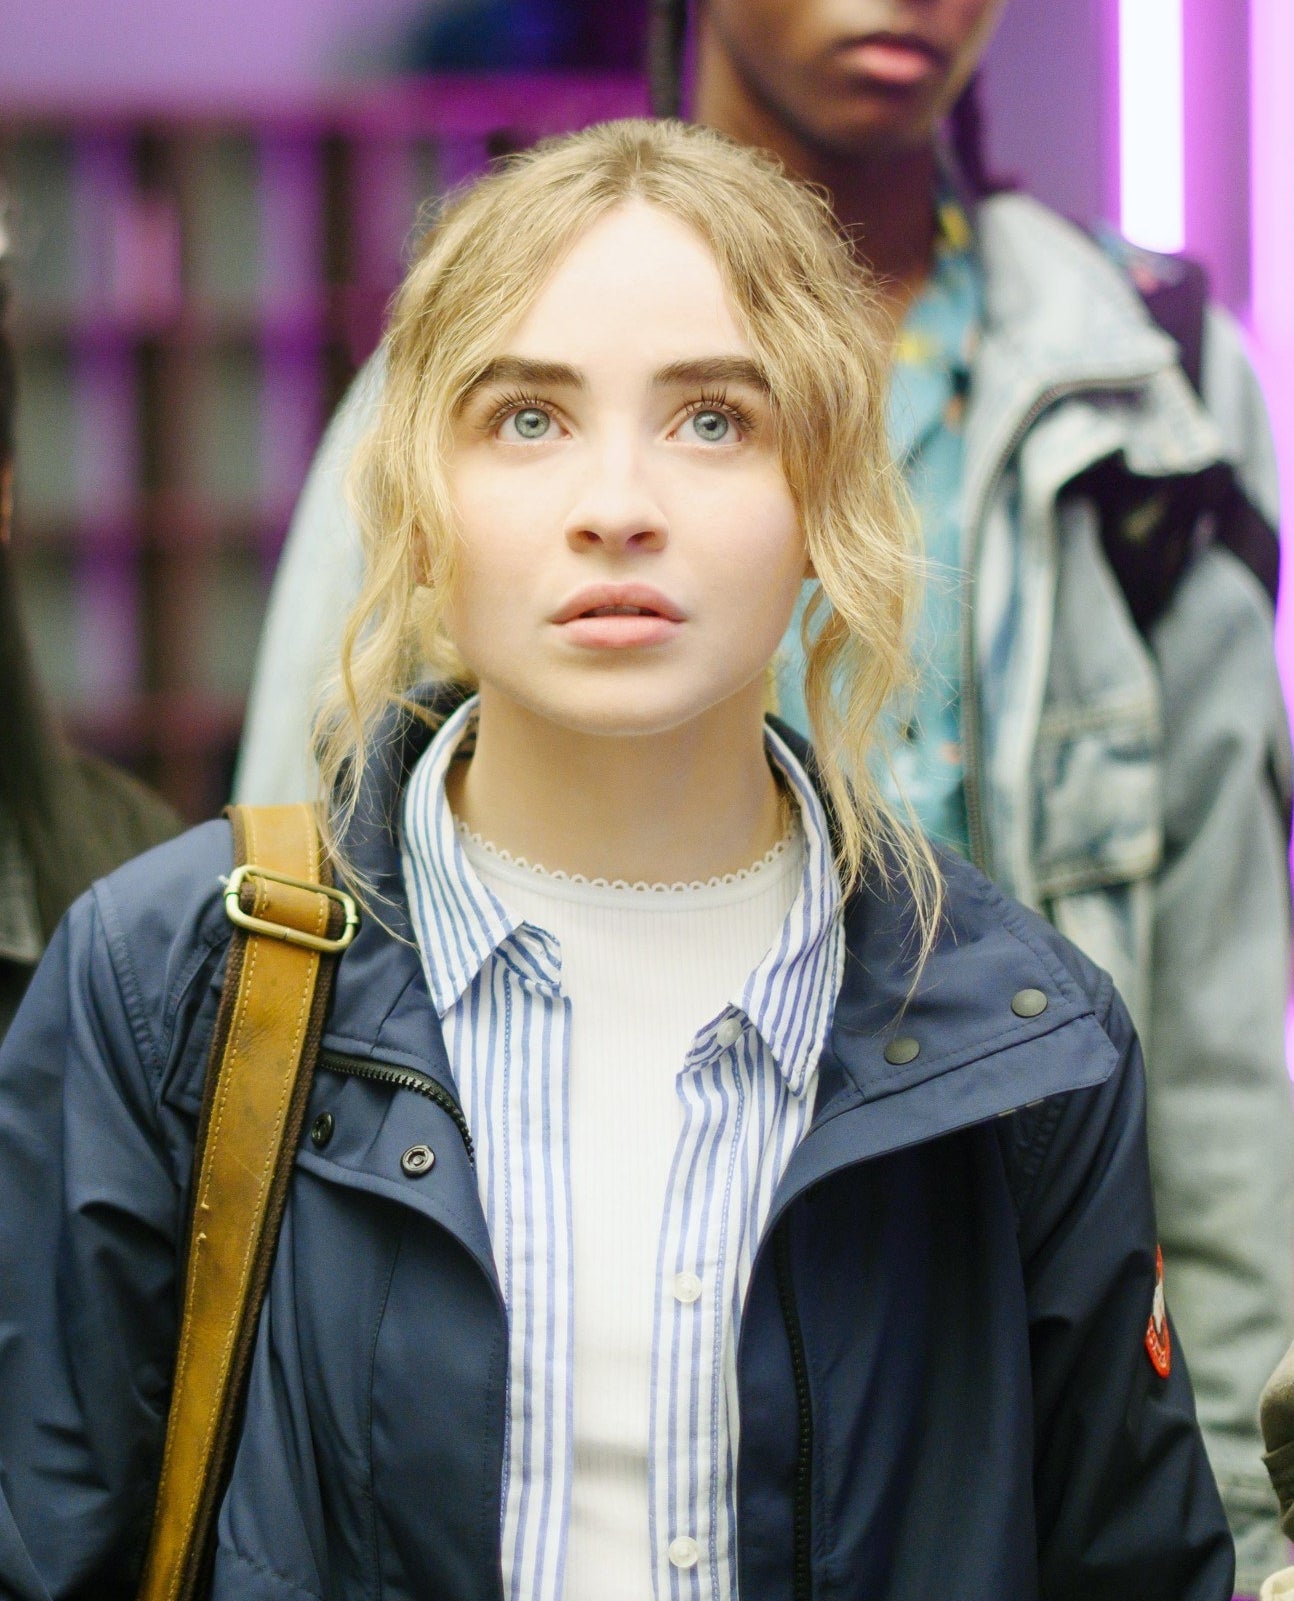 Sabrina in the film